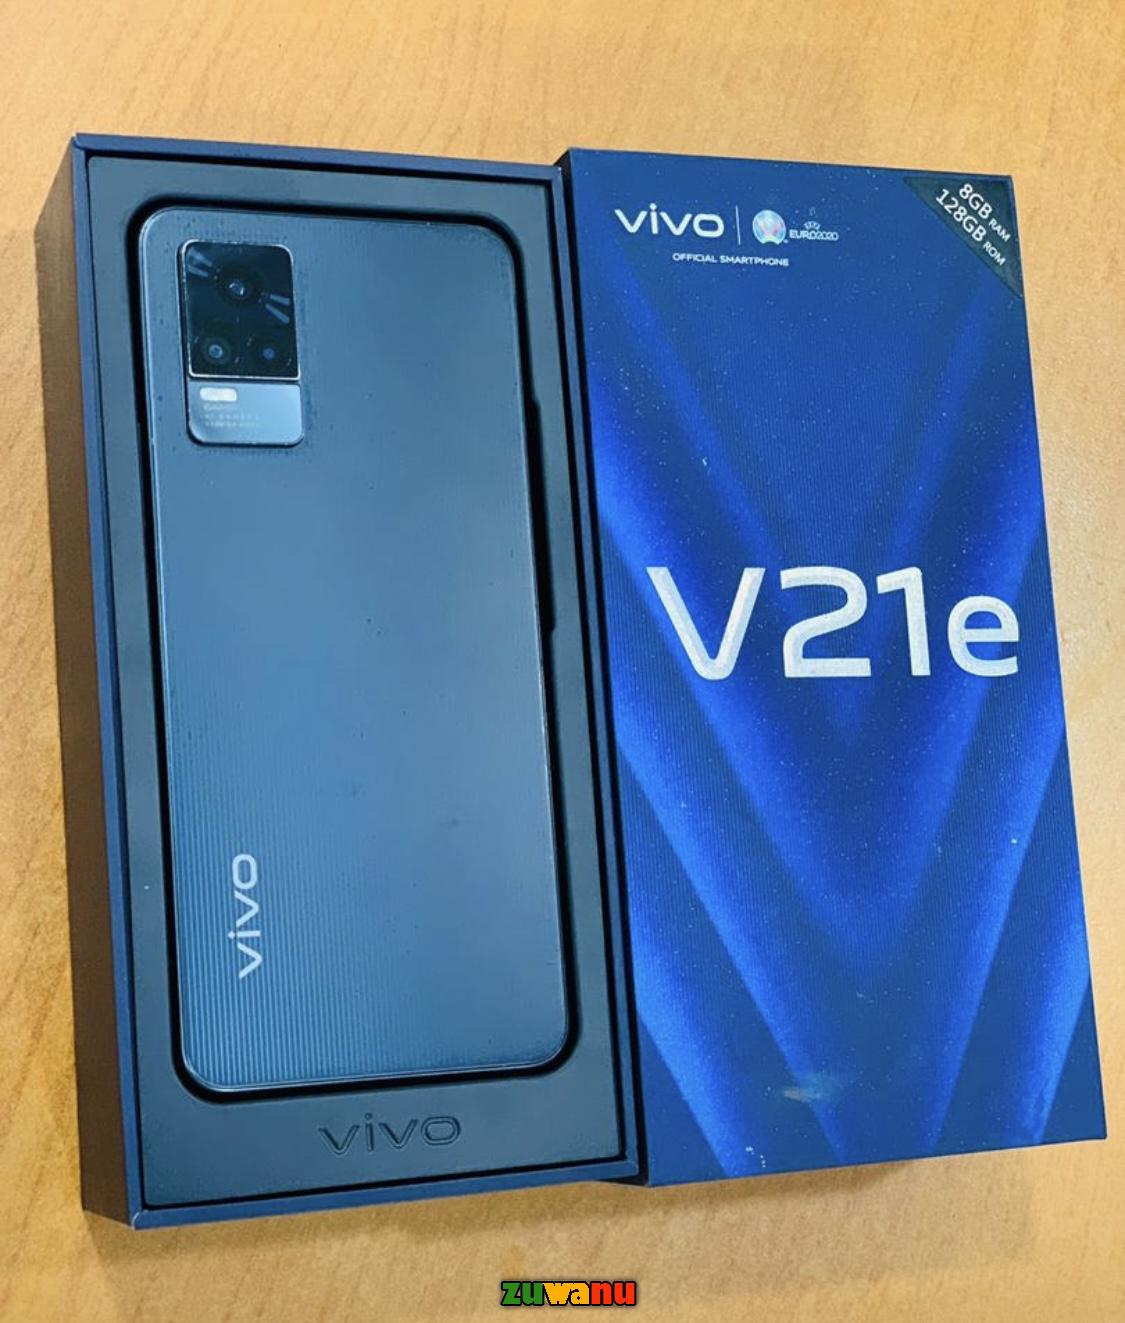 Vivo V21e 4G price